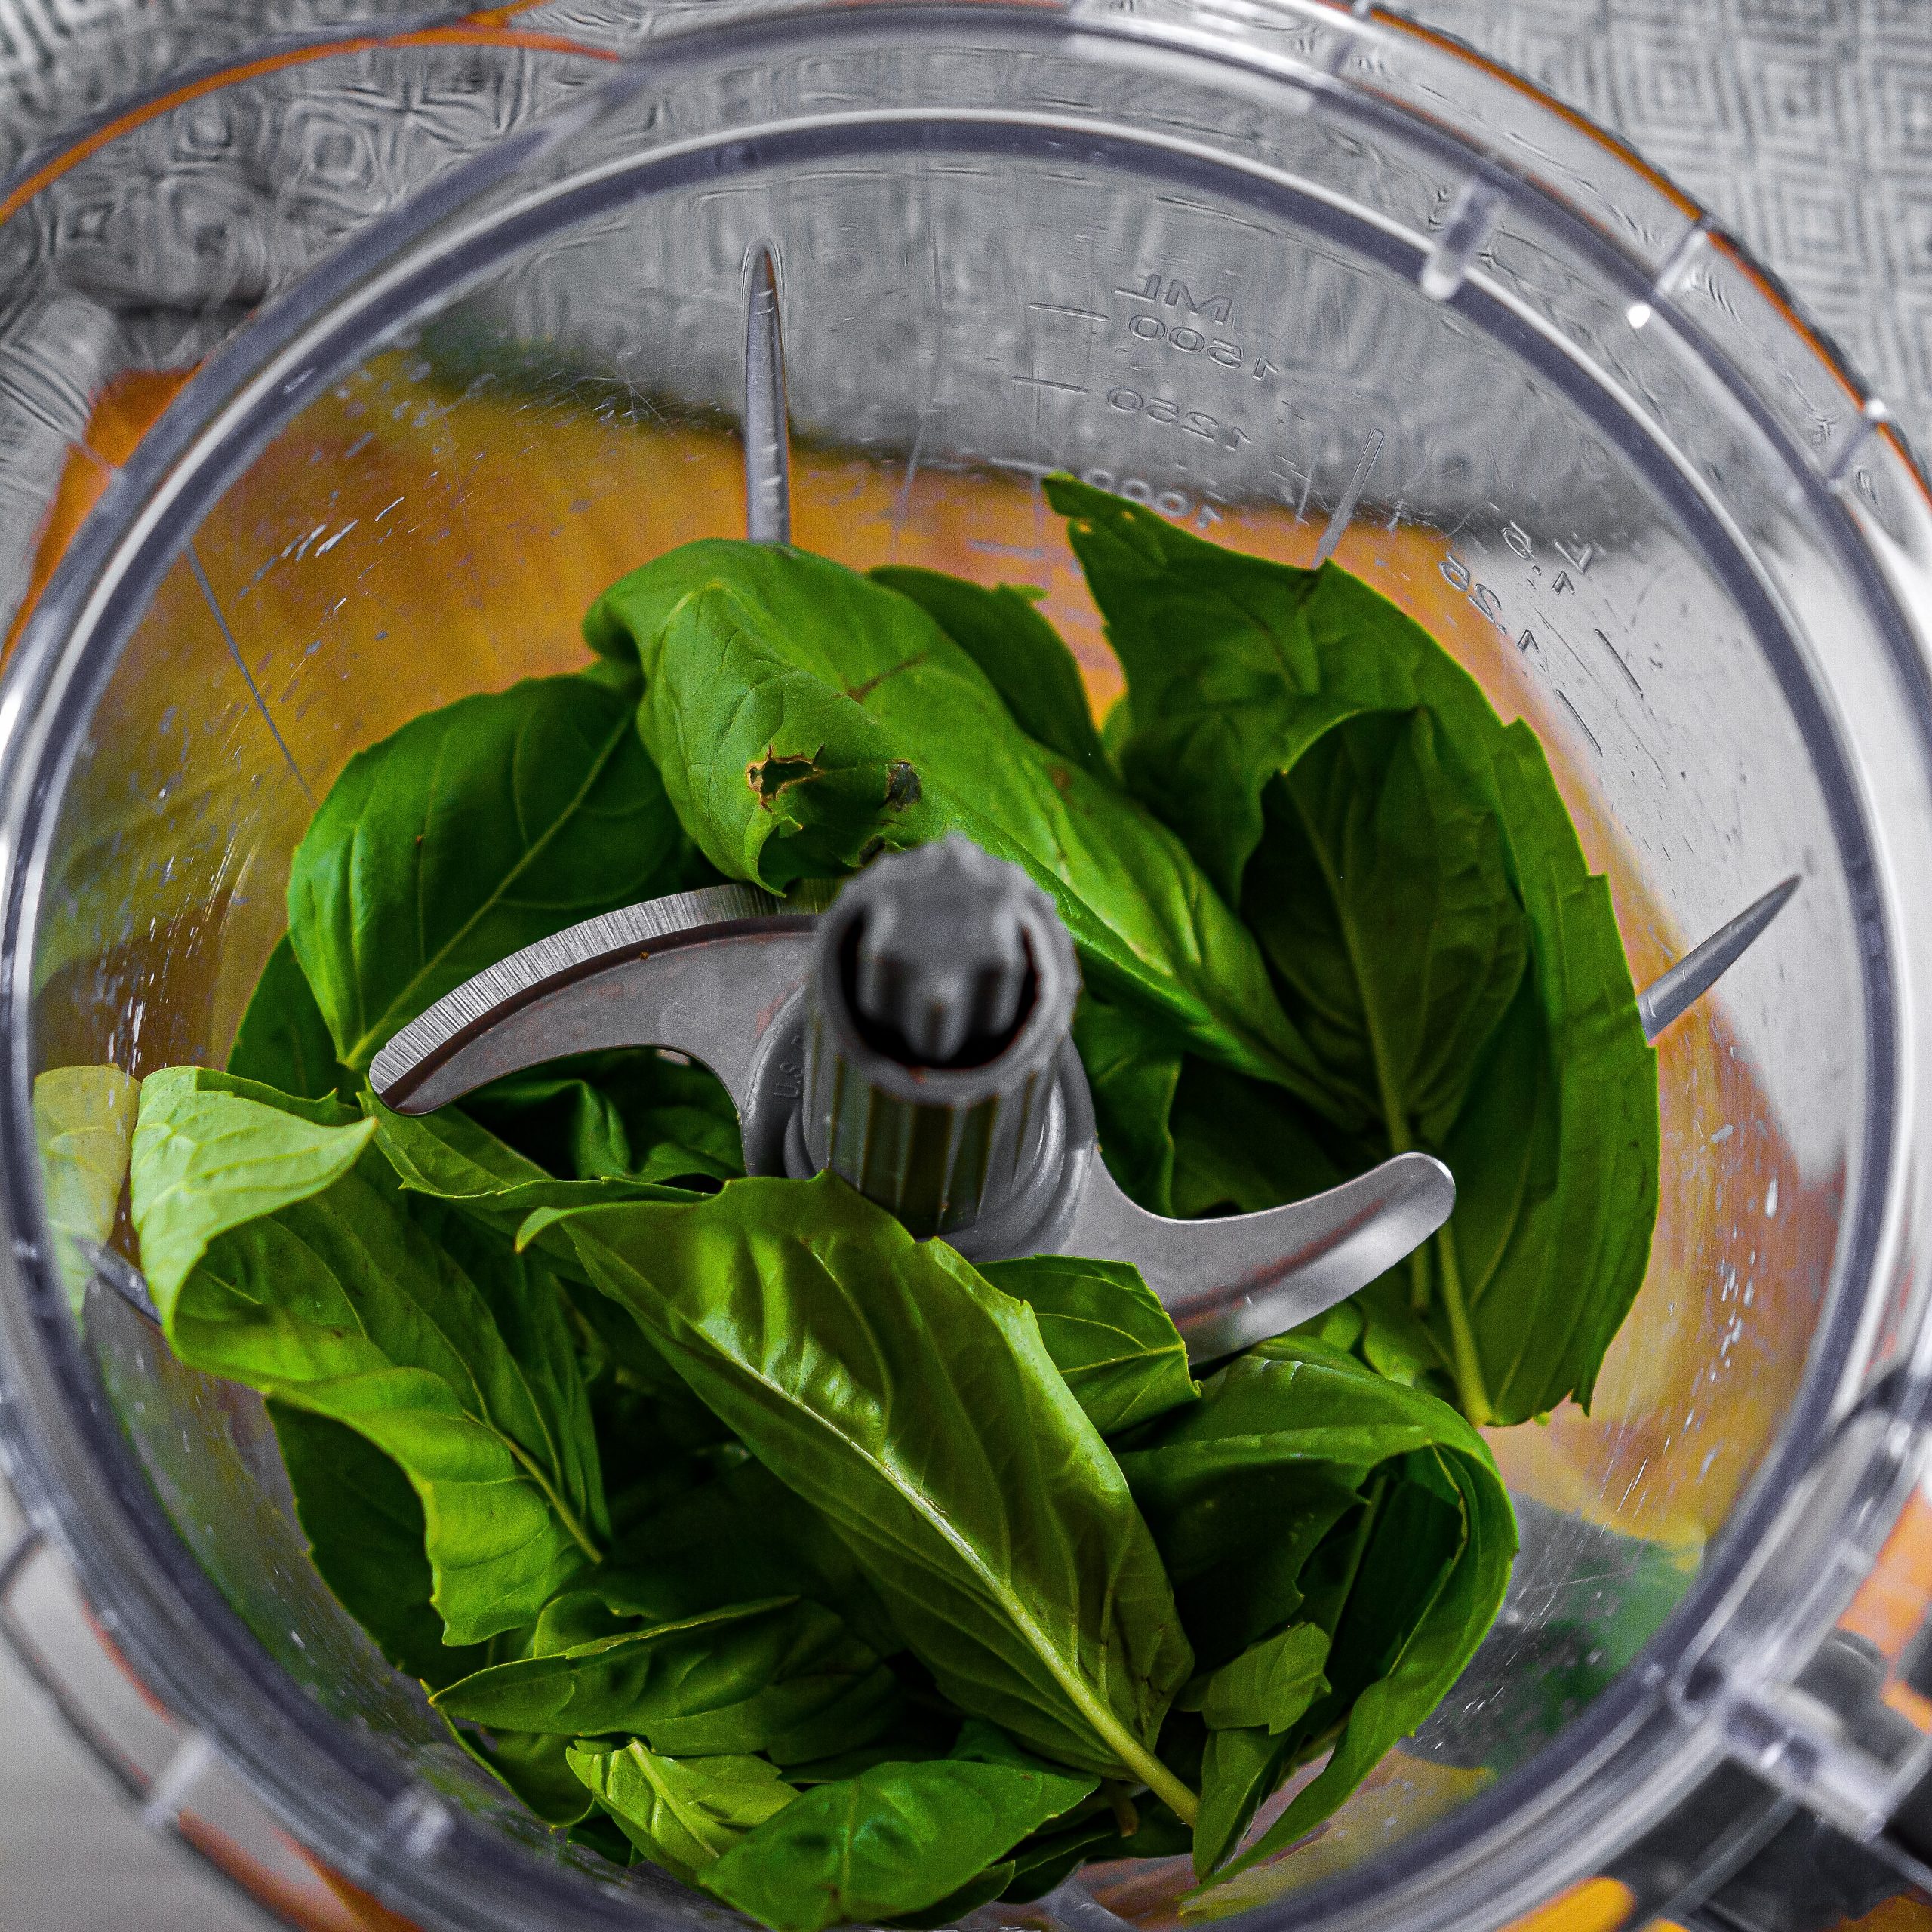 In a blender or food processor add the fresh basil leaves.